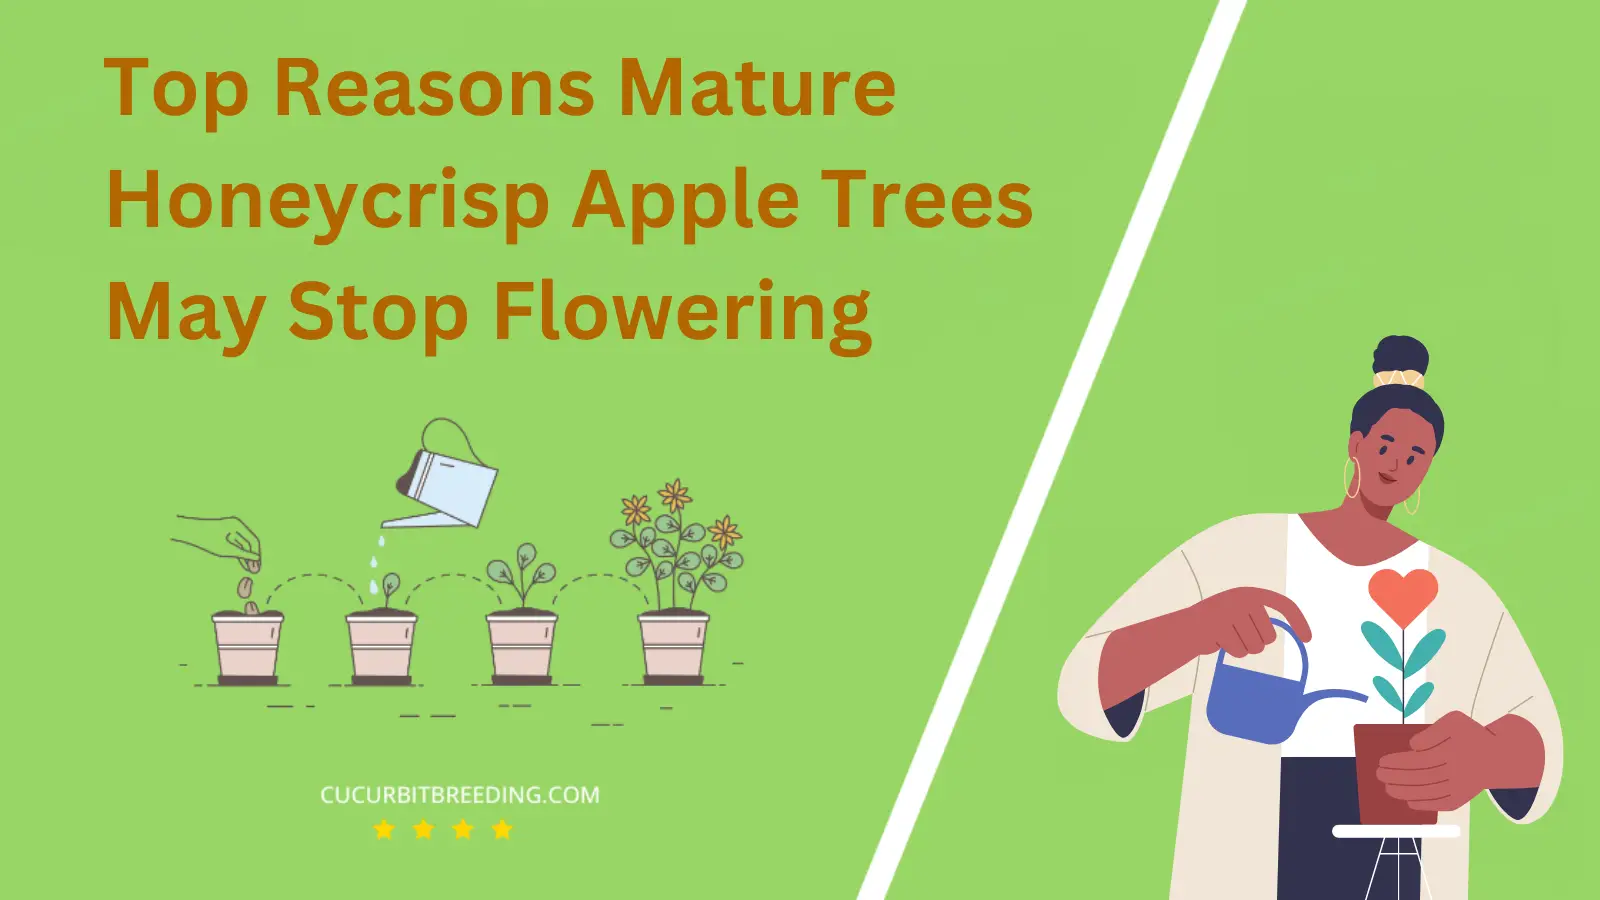 Top Reasons Mature Honeycrisp Apple Trees May Stop Flowering